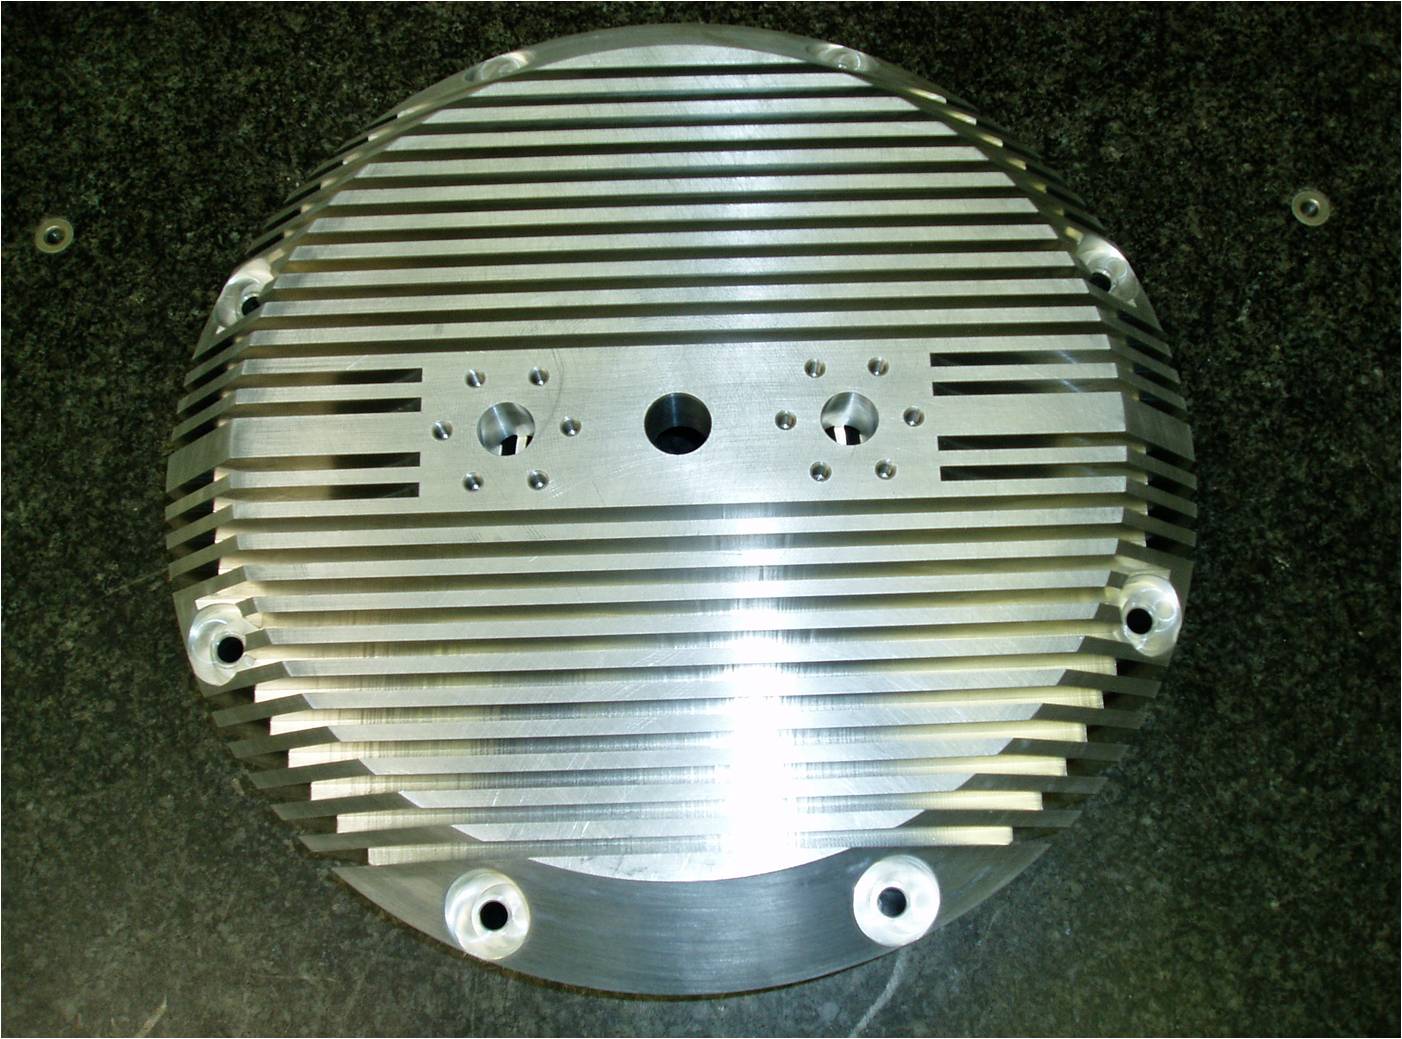 Machined Aluminum Heat Exchanger Cover.